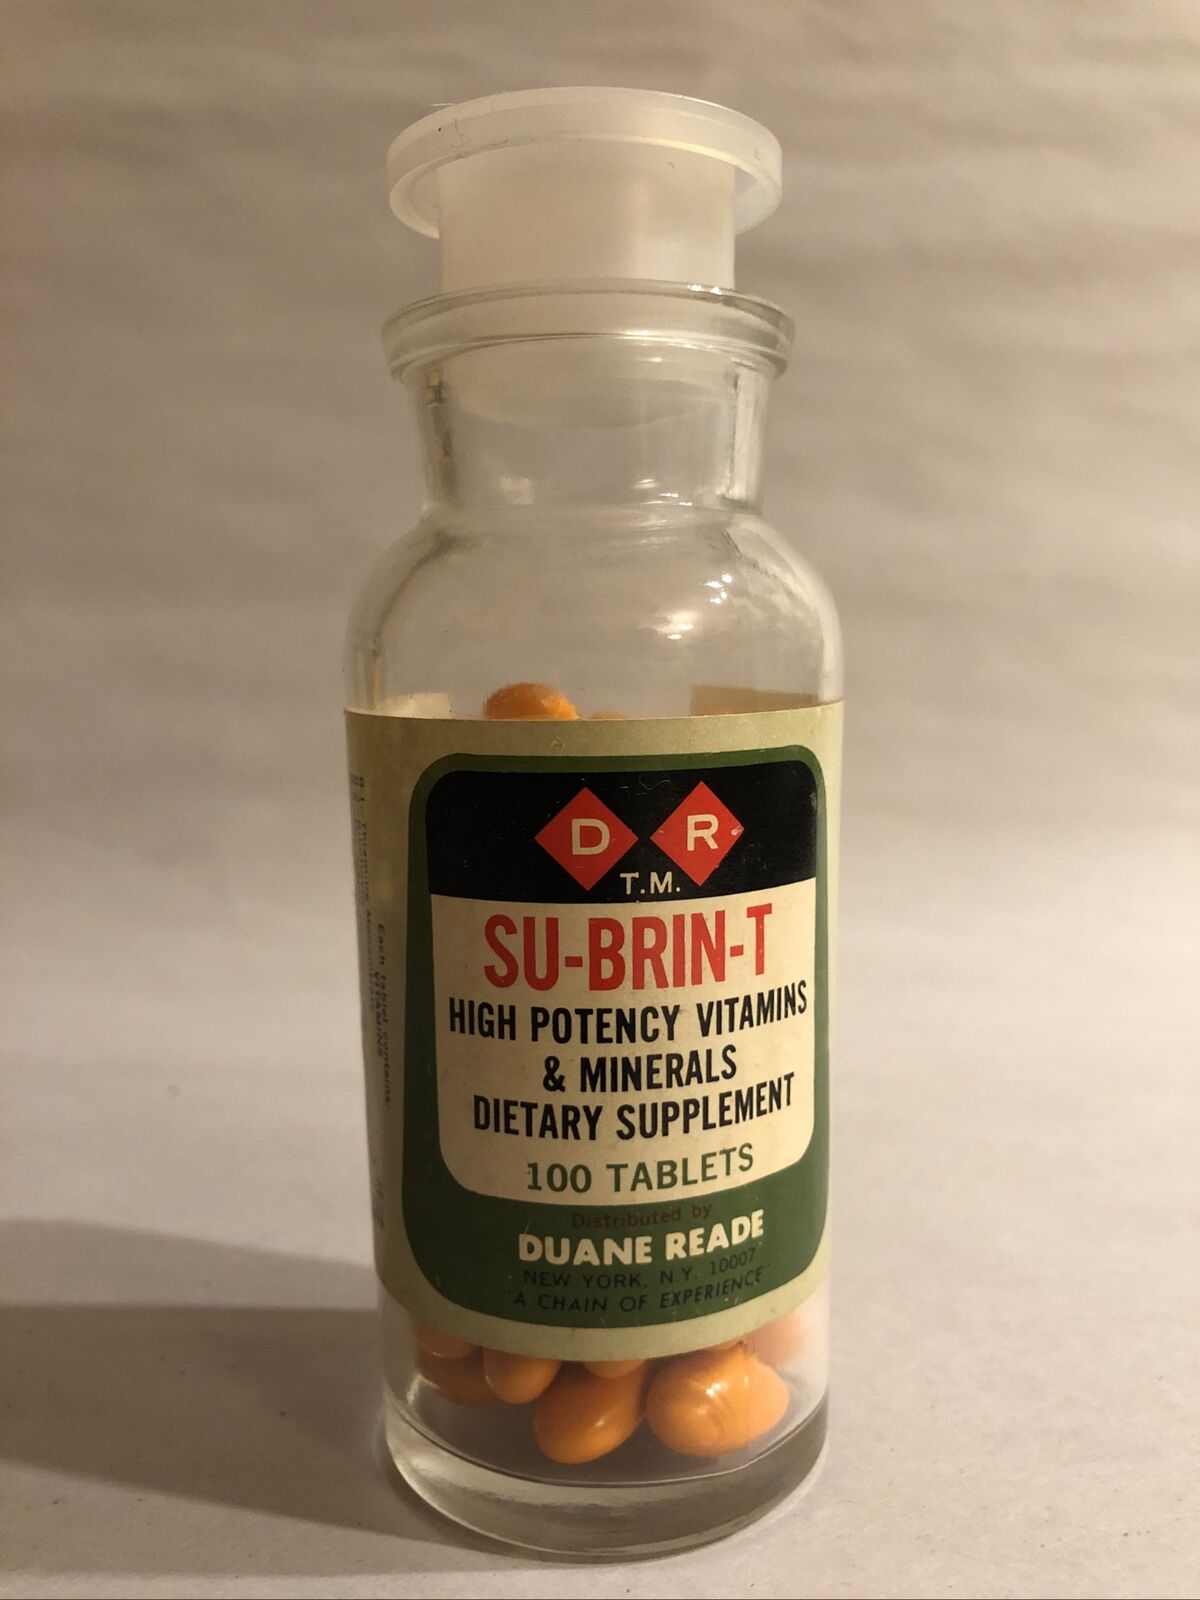 Vintage Duane Reade High Potency Vitamins Su-brin-t Apothecary Glass Bottle